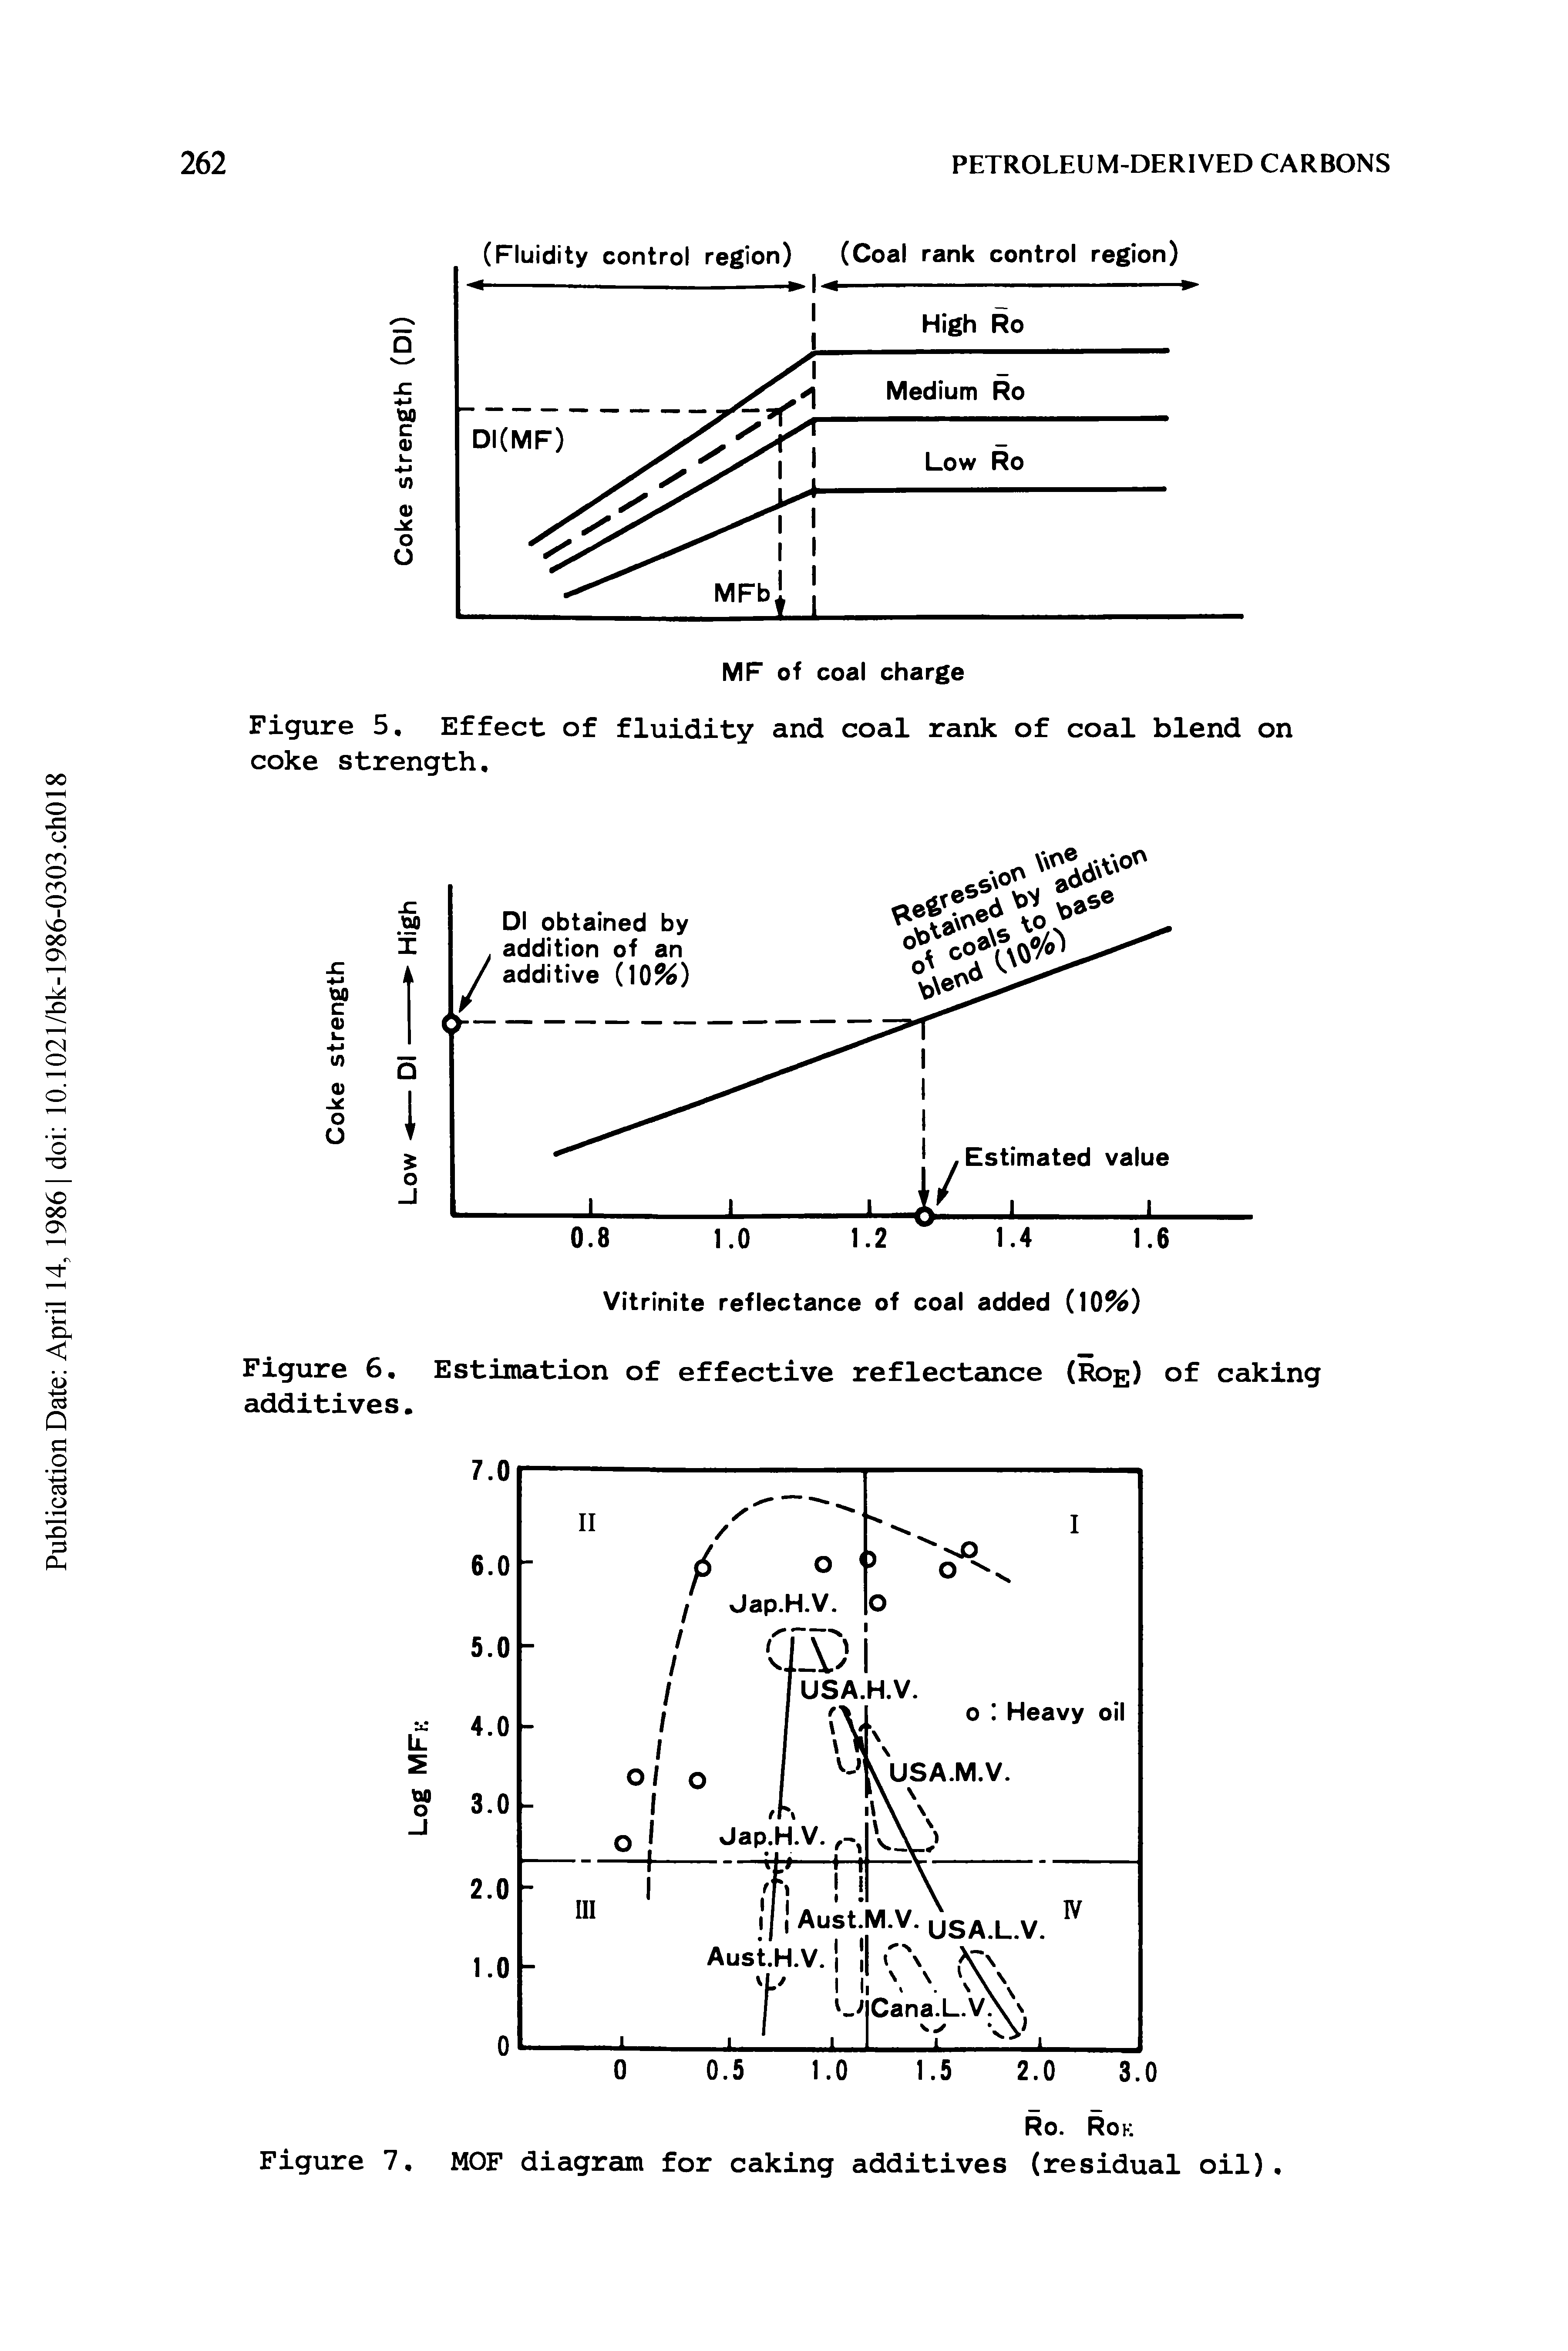 Figure 5. Effect of fluidity and coal rank of coal blend on coke strength.